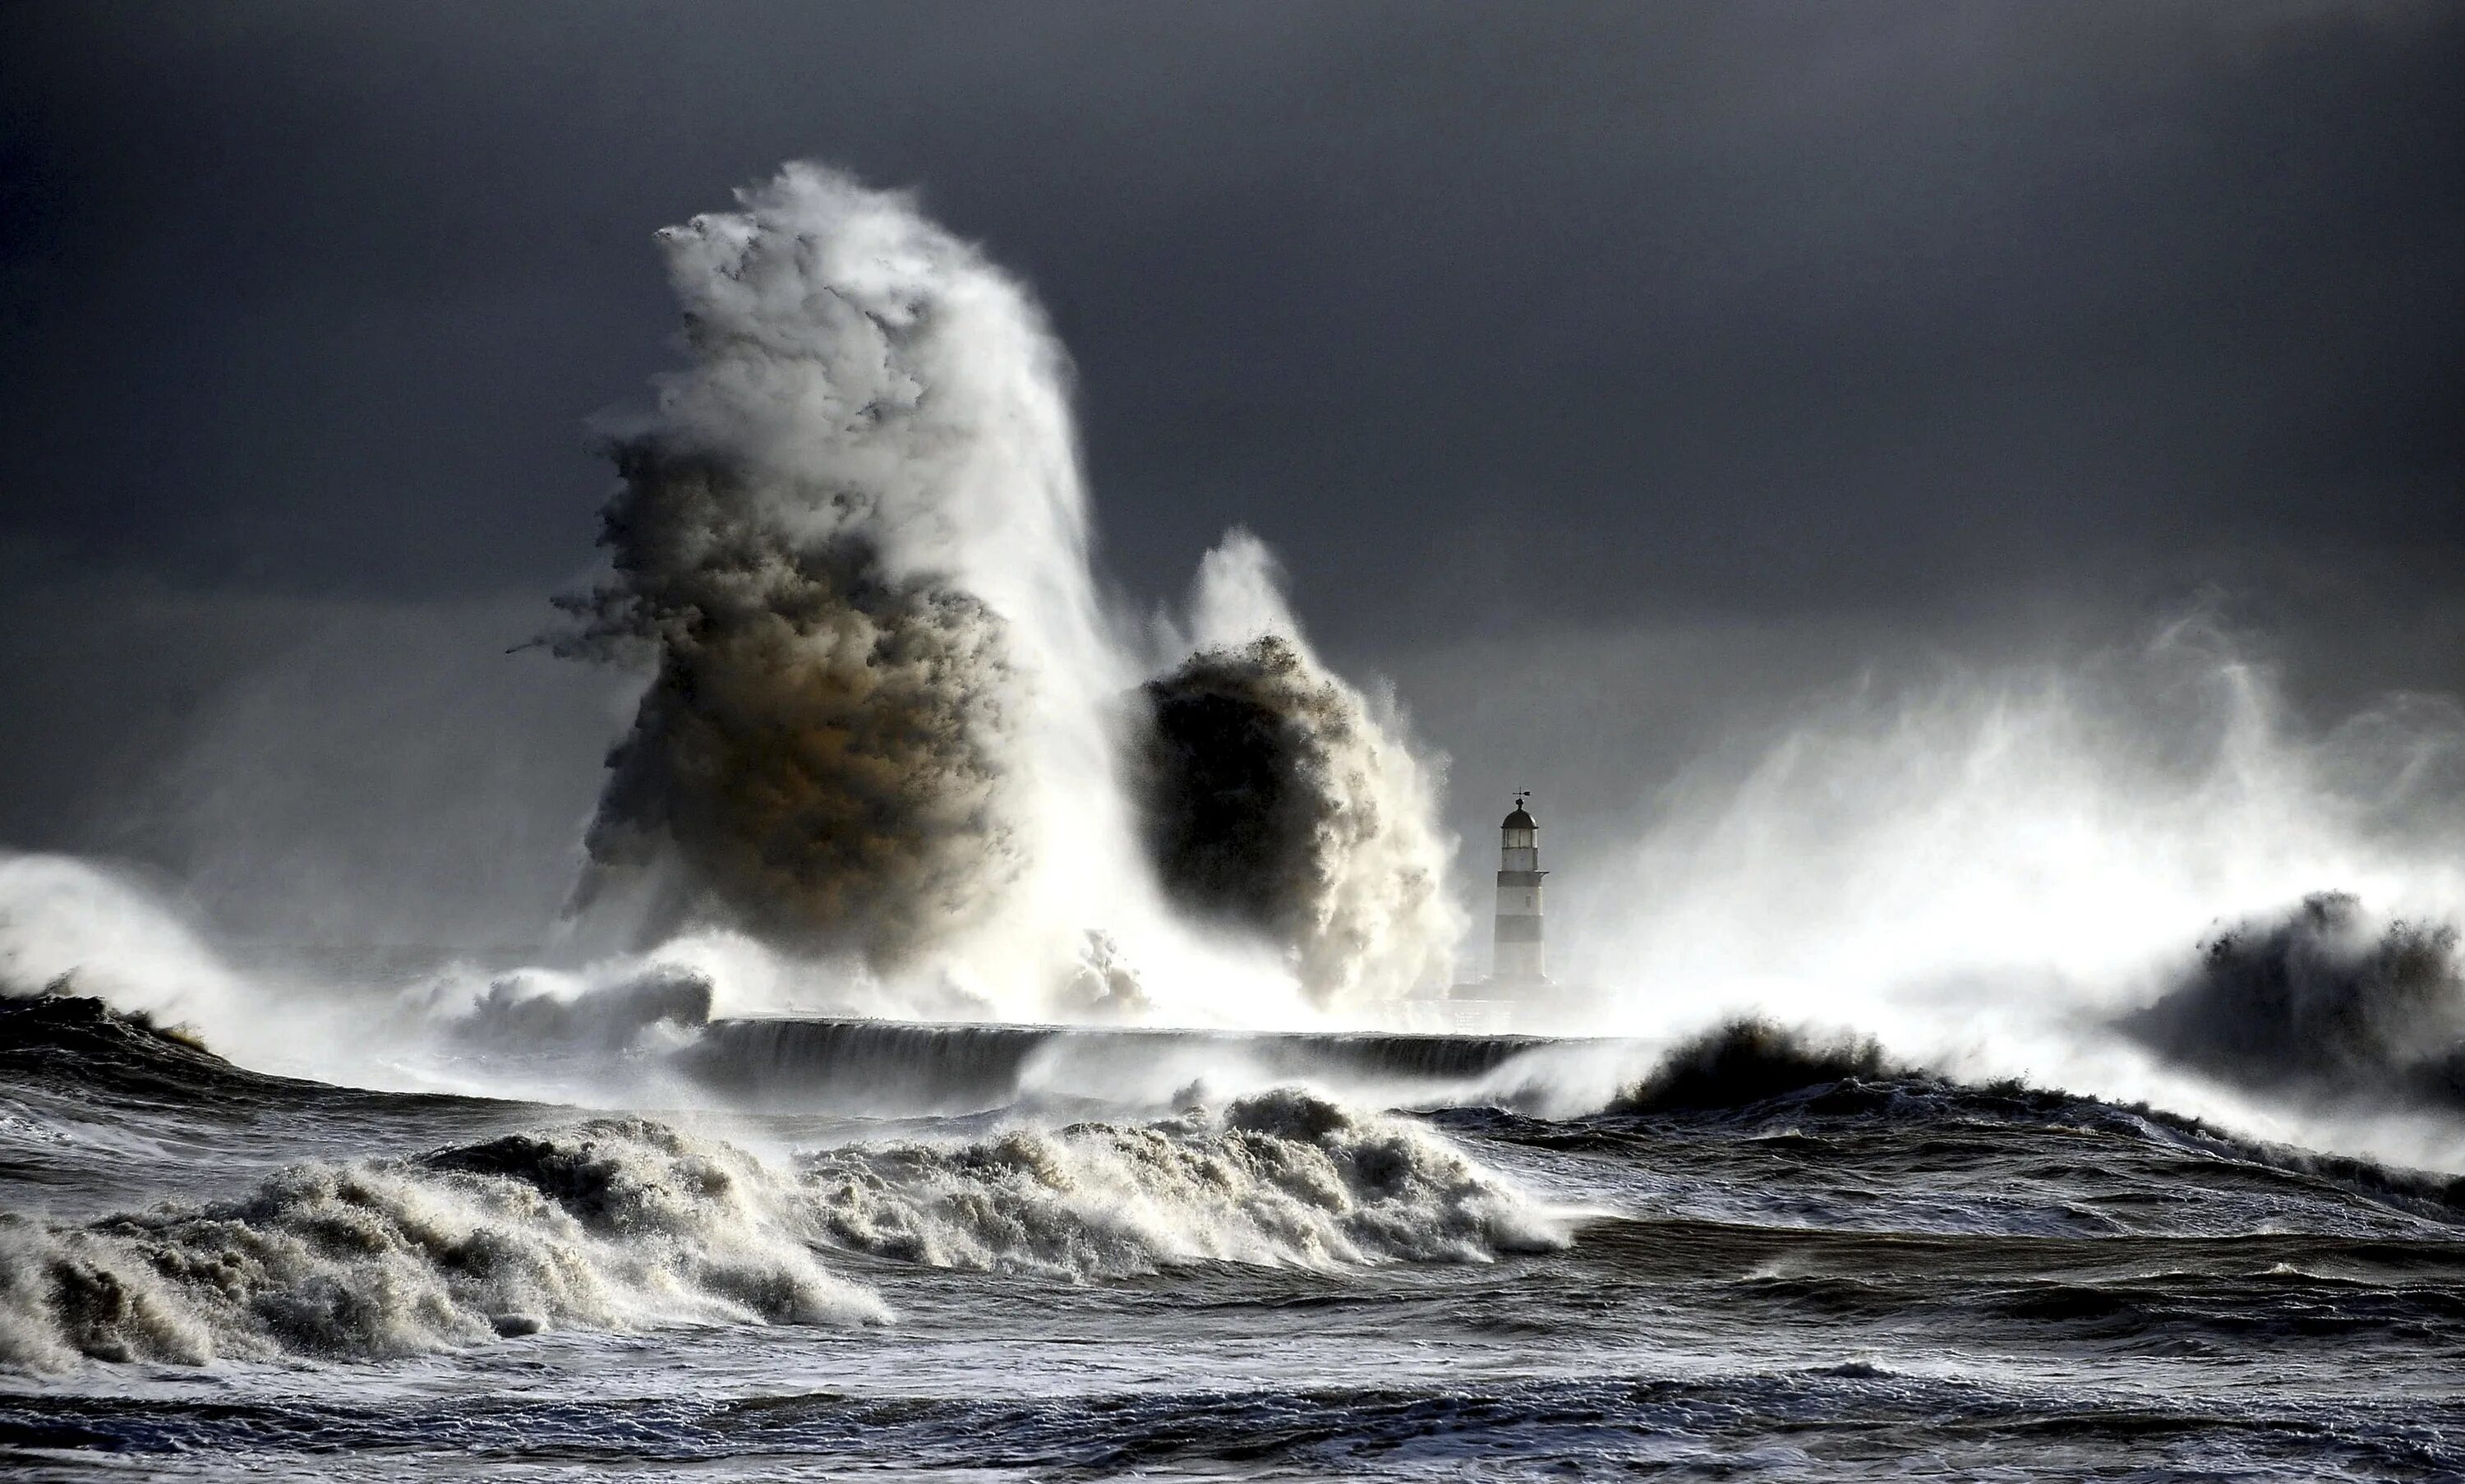 Шторм утихнет. Карское море шторм. Атлантический океан шторм. Море океан волны шторм ЦУНАМИ. Вулкан Креницына волны шторм.